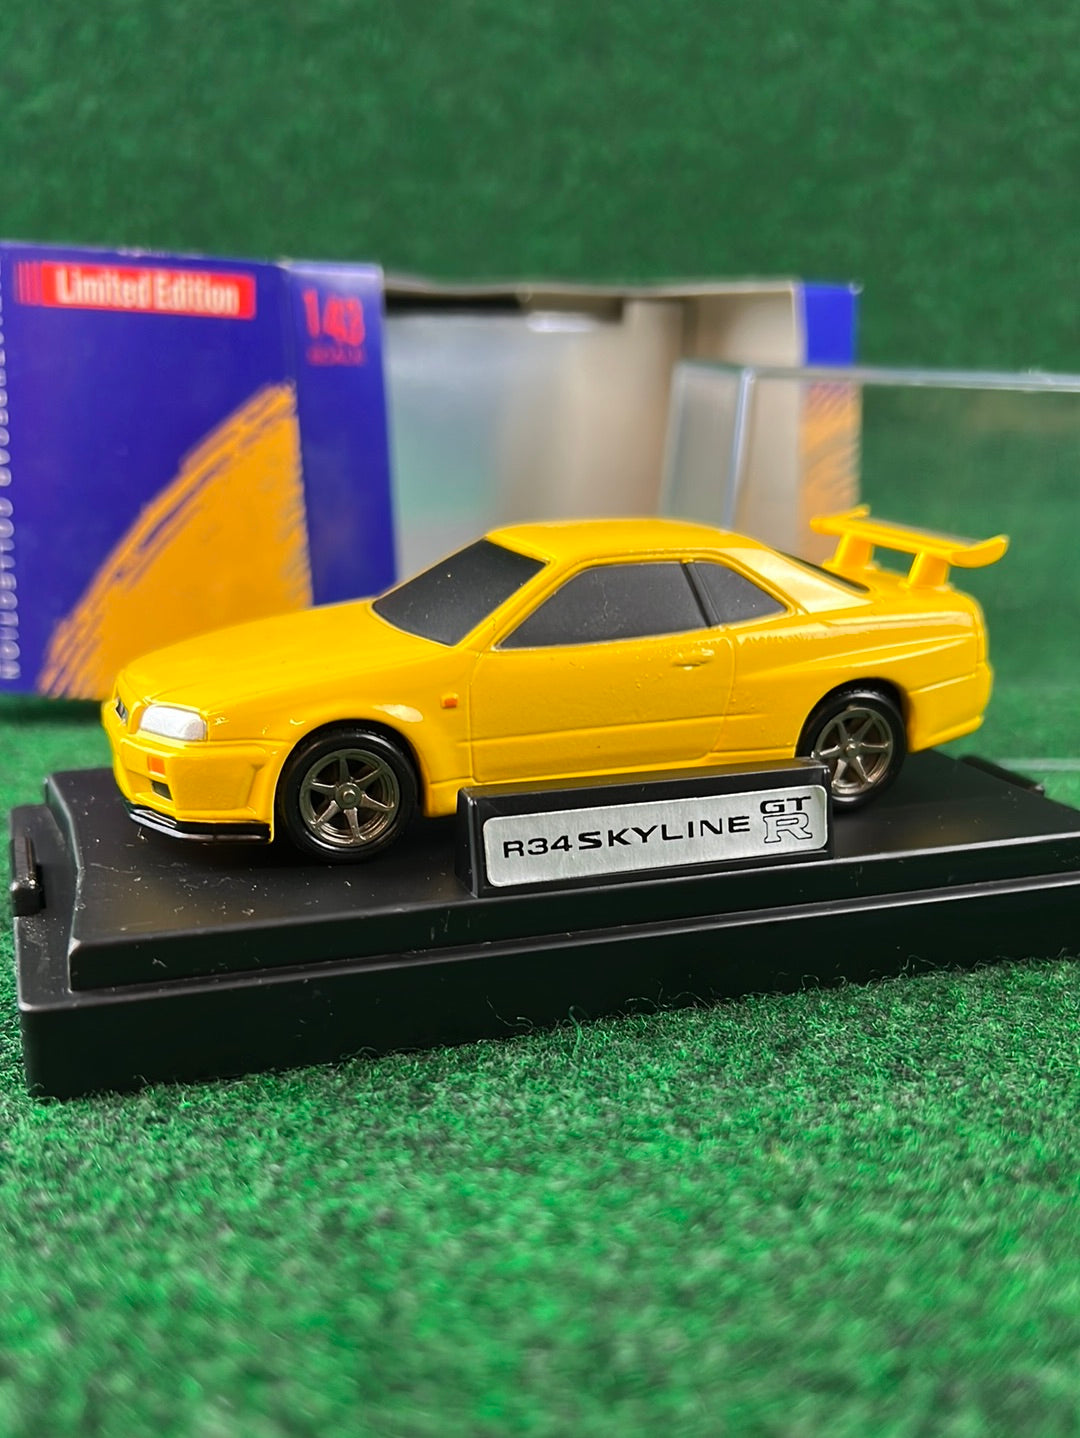 MTECH Limited Edition Nissan Skyline R34 GTR “EV1” Lightning Yellow Tribute Diecast